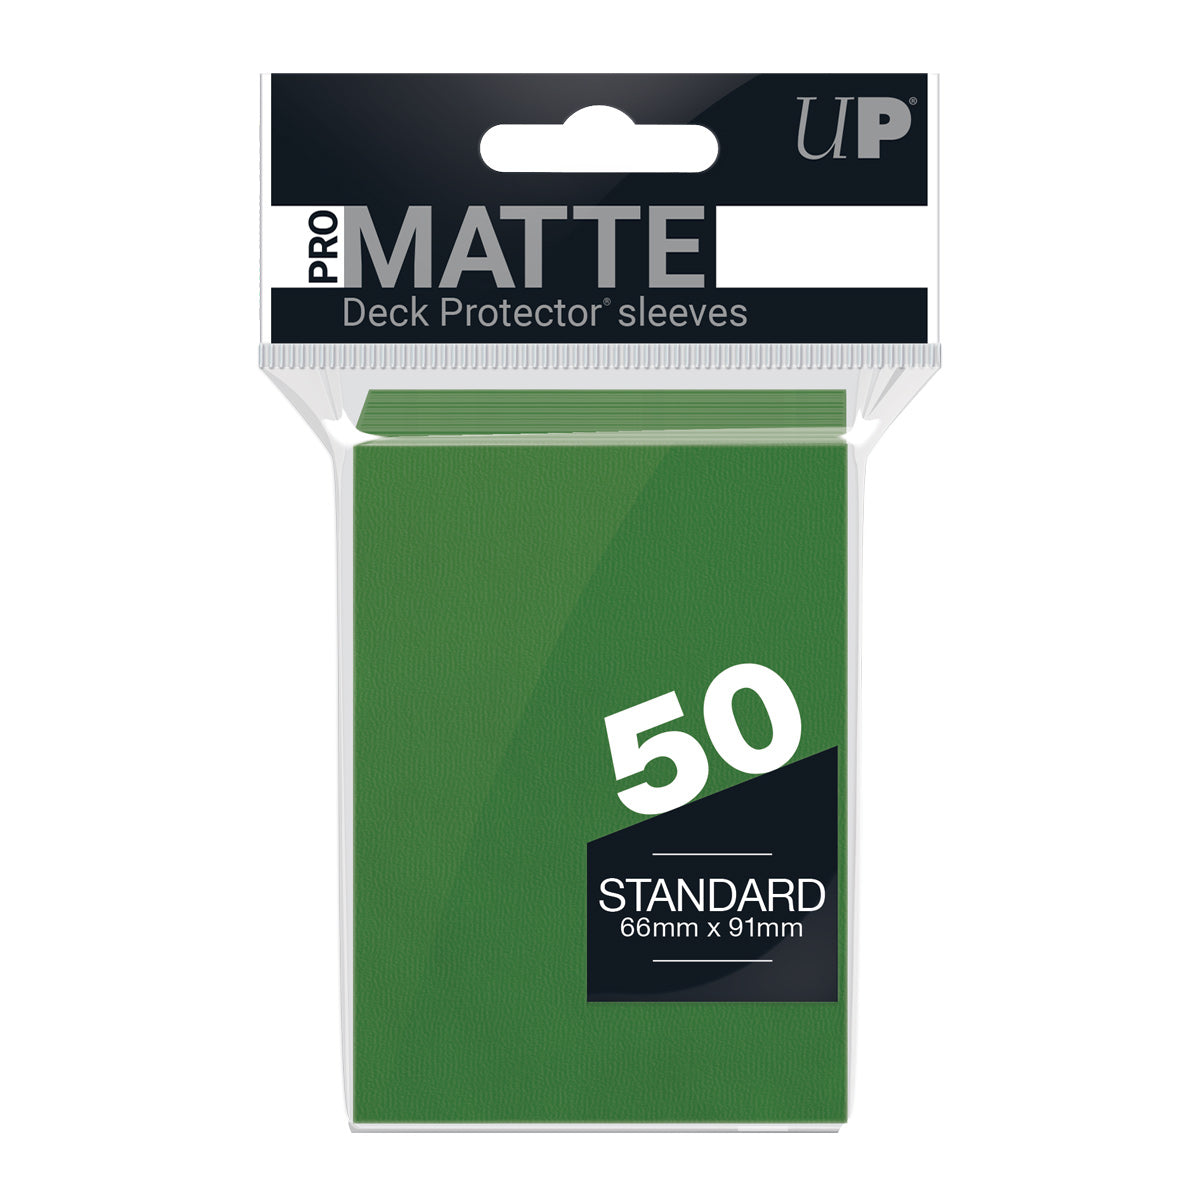 Ultra PRO Card Sleeve Pro-Matte Standard 50ct - Green